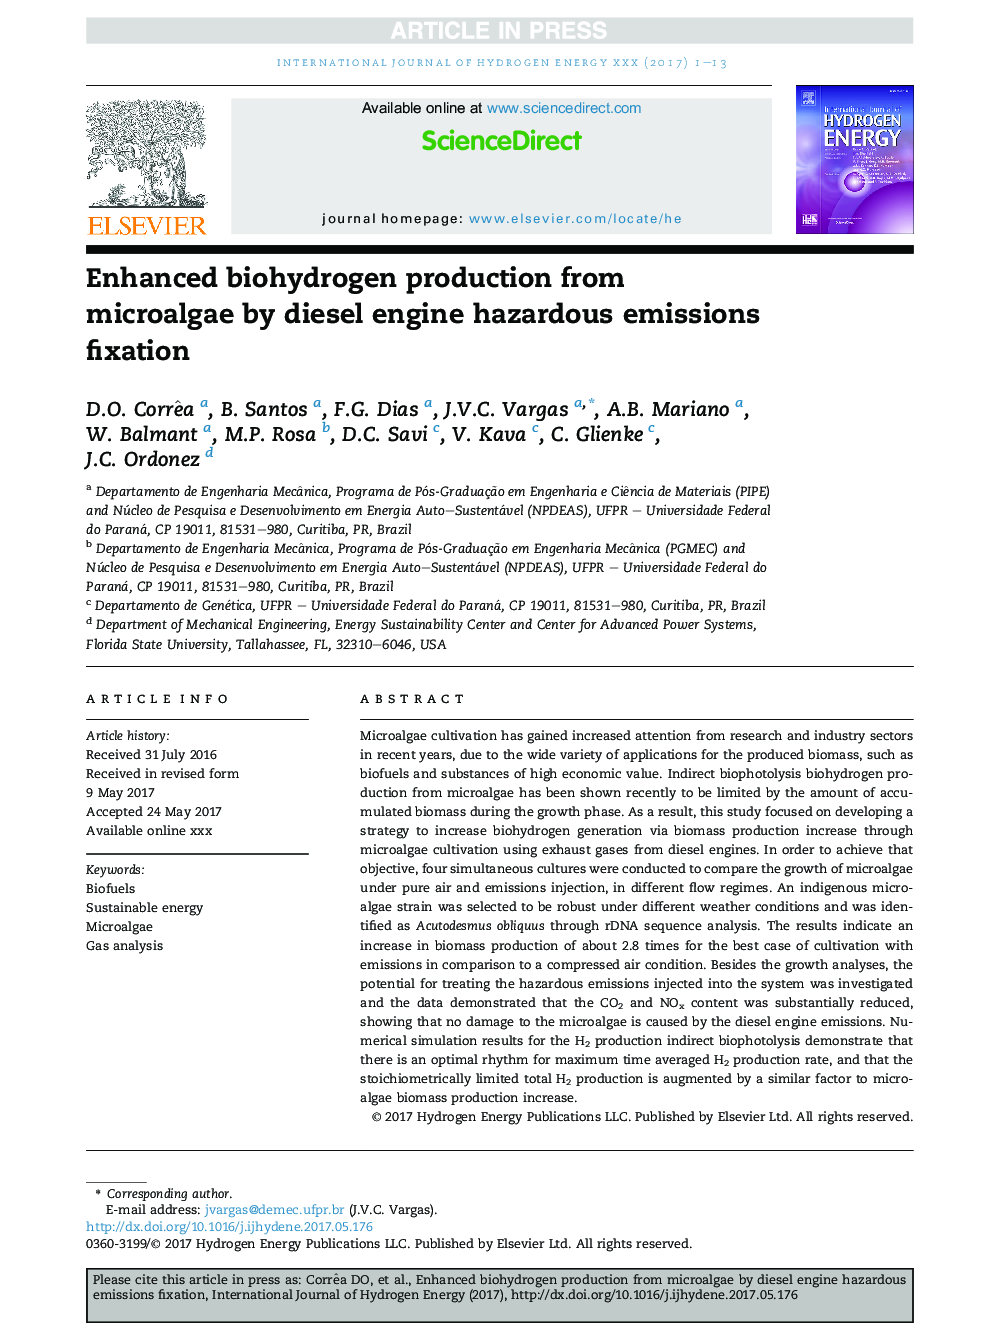 Enhanced biohydrogen production from microalgae by diesel engine hazardous emissions fixation